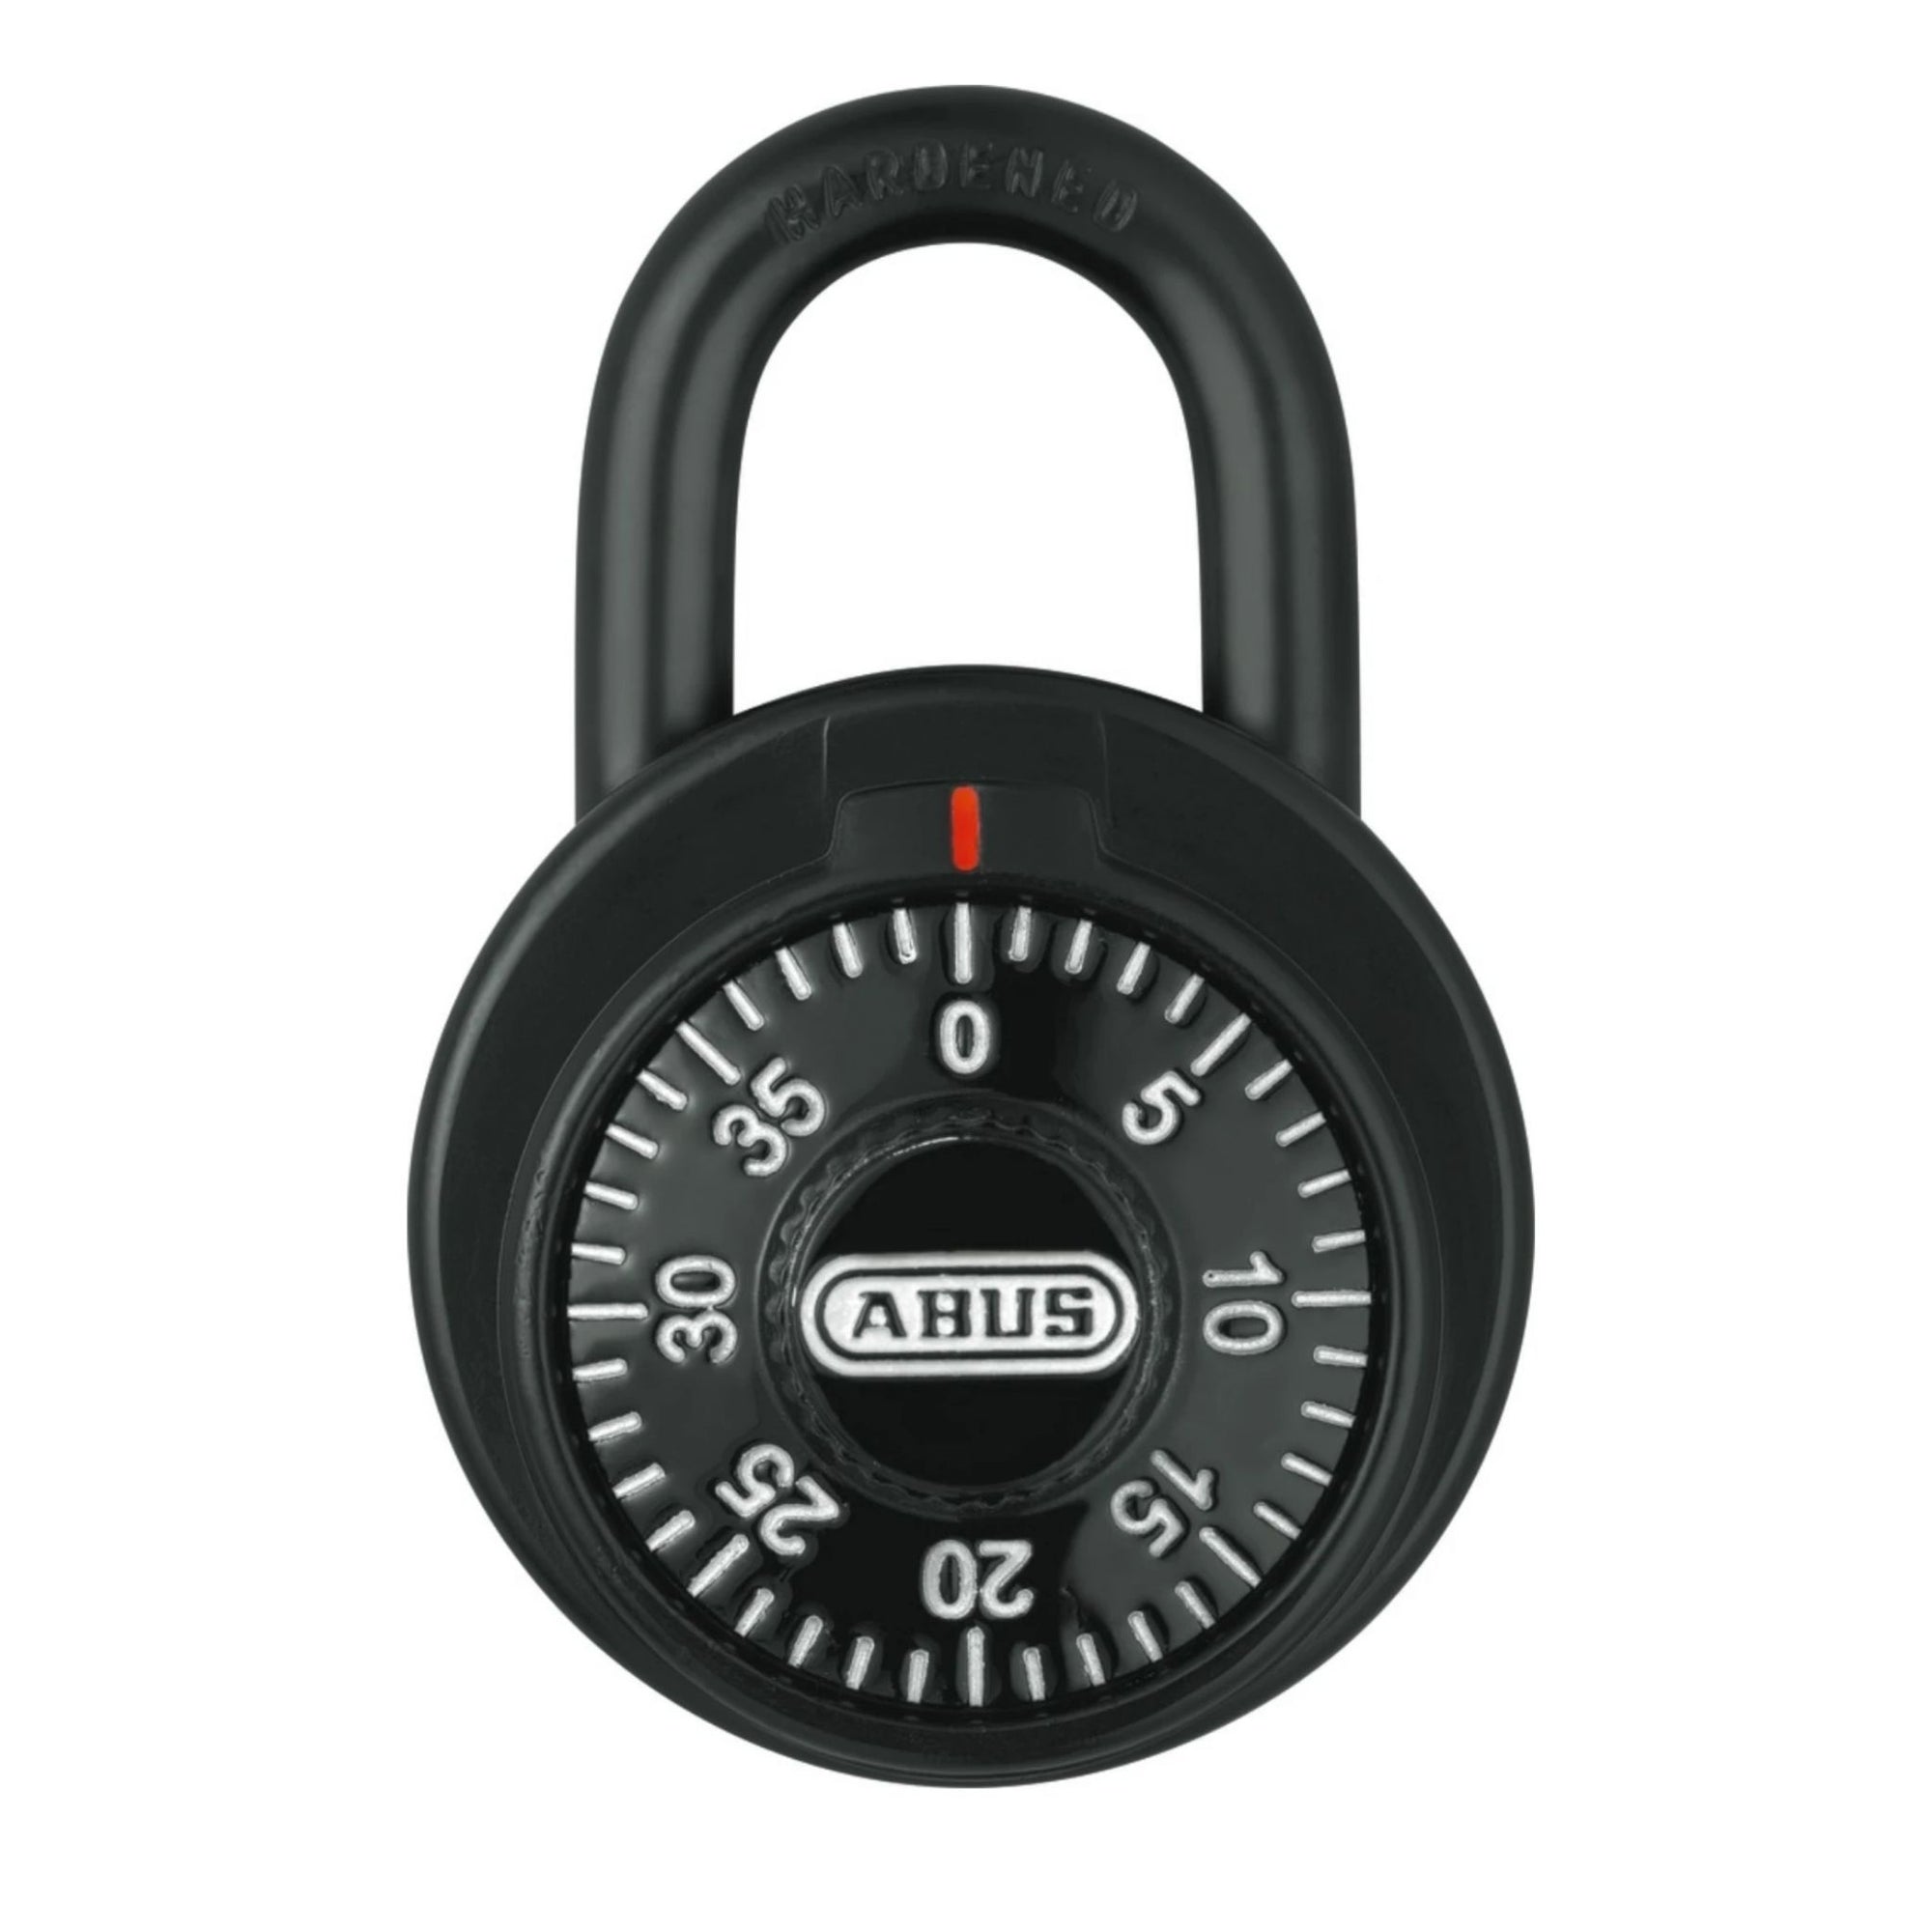 Abus 78/50 KC KA 501 Black Locker Padlock with Key Control Matched to Key Number KA501 - The Lock Source